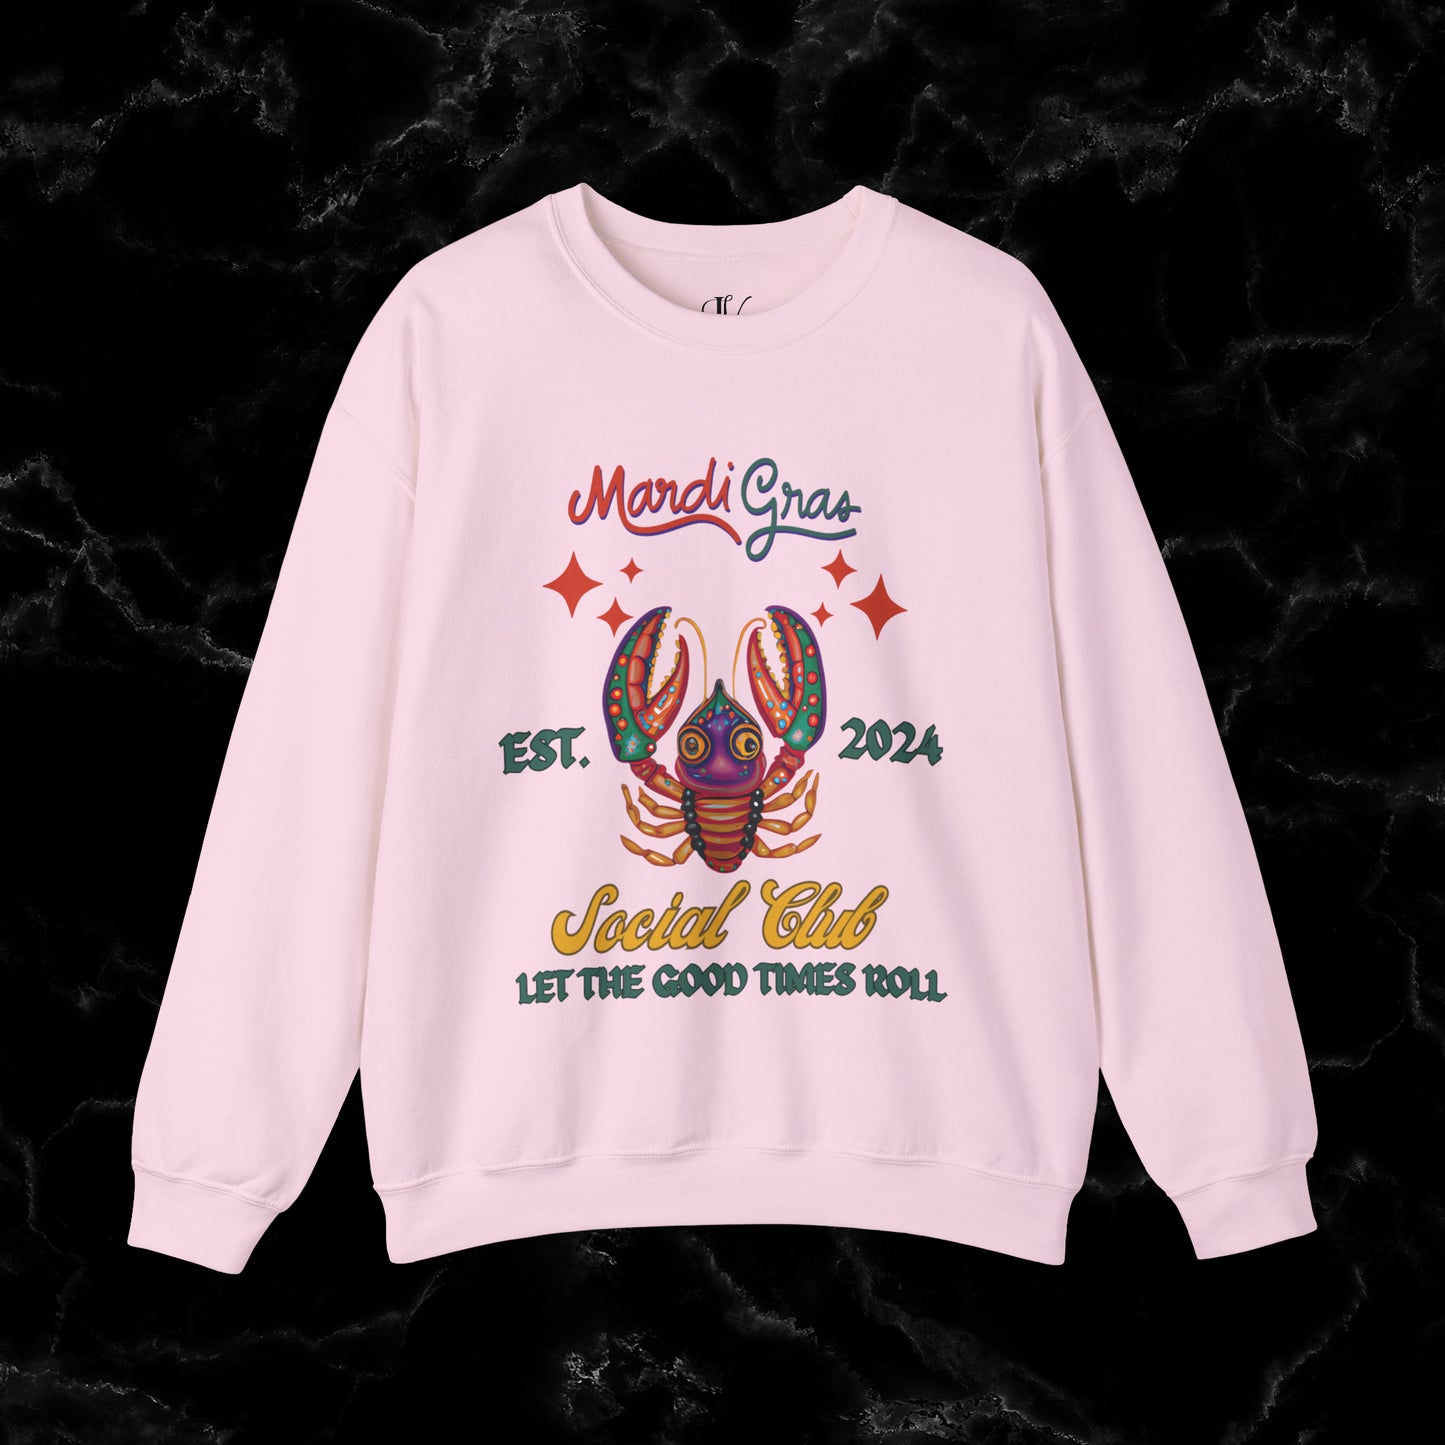 Mardi Gras Sweatshirt Women - NOLA Luxury Bachelorette Sweater, Unique Fat Tuesday Shirt, Louisiana Girls Trip Sweater, Mardi Gras Social Club Style Sweatshirt S Light Pink 